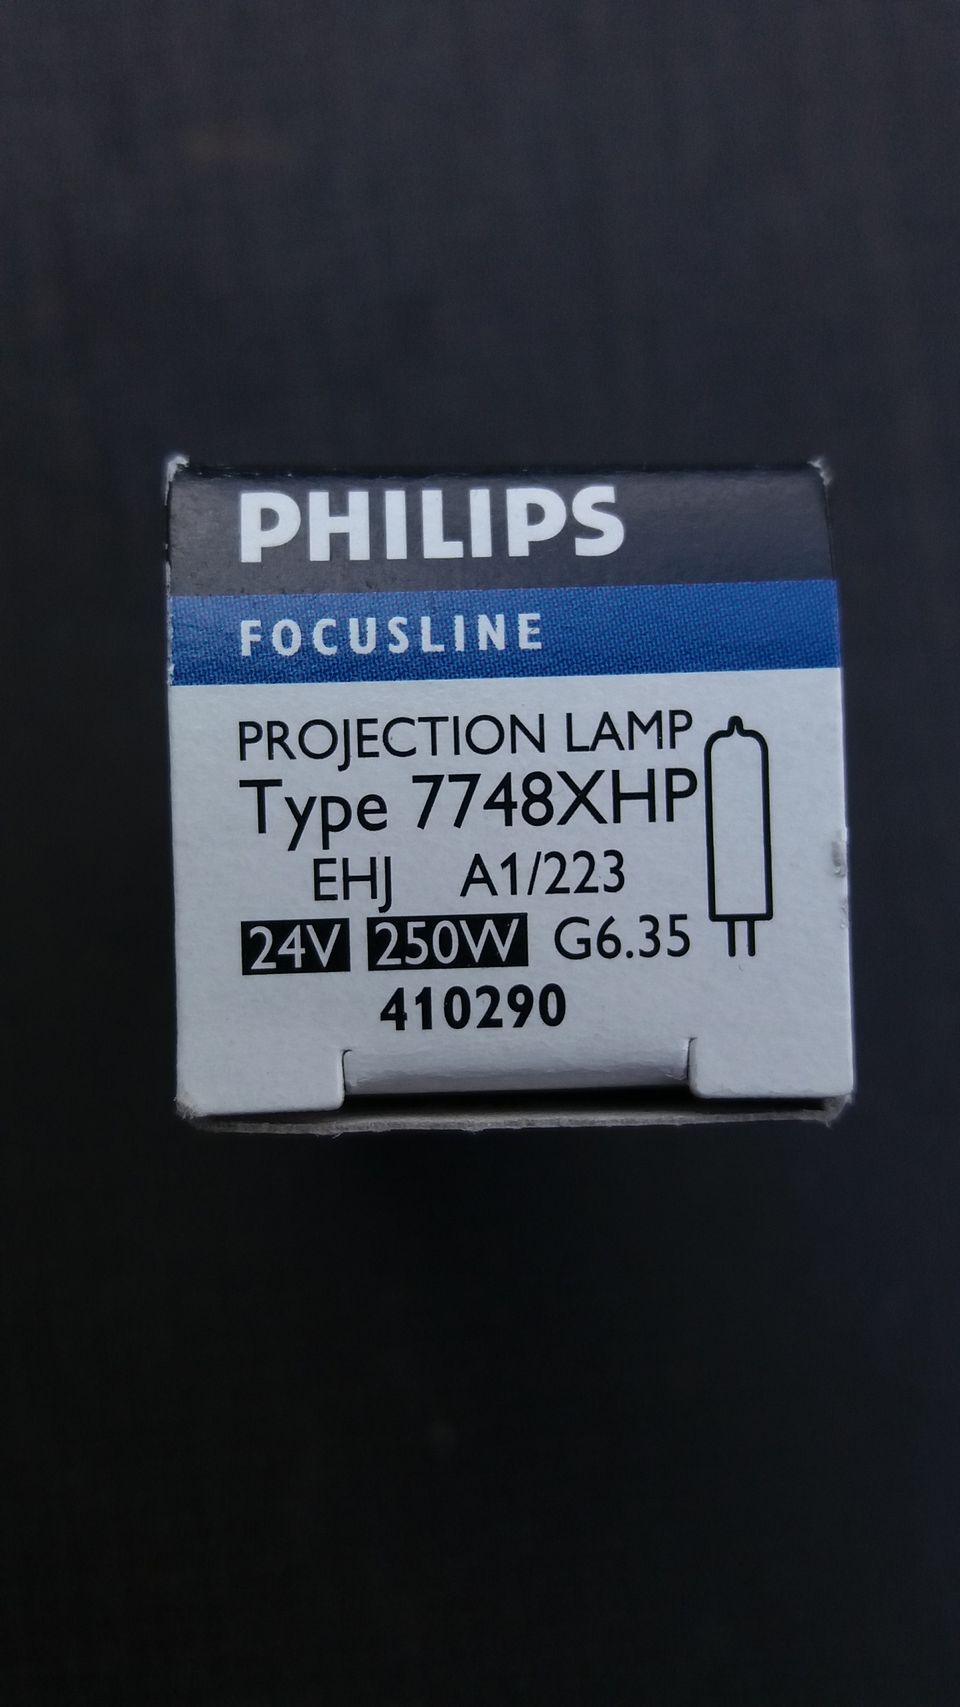 Philips Focusline piirtoheitinlamppu